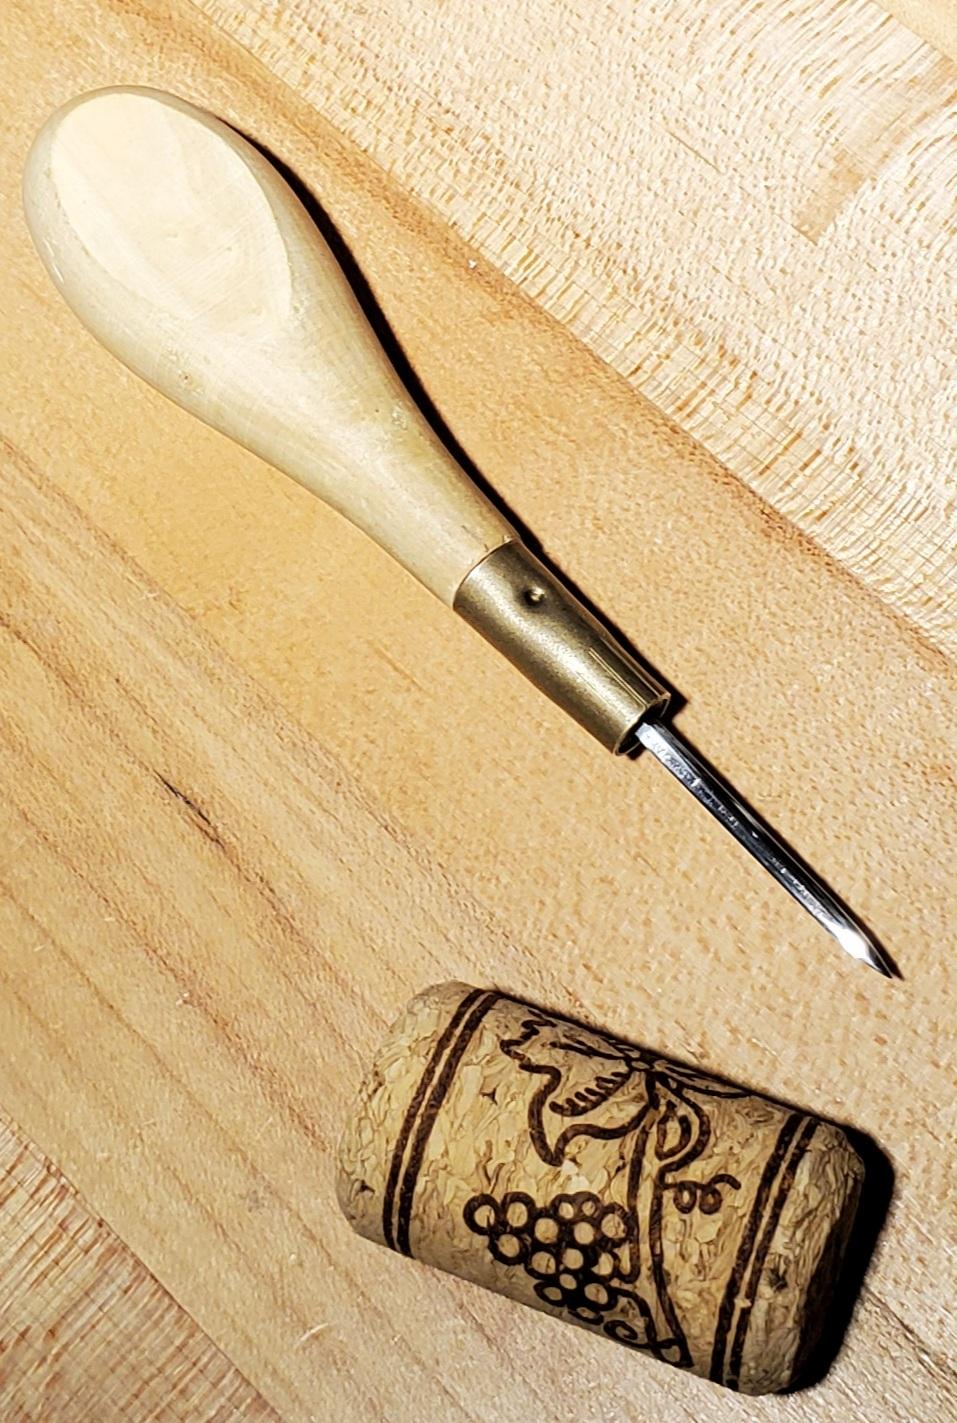 Stitching Awl - Interchangeable blade - Small